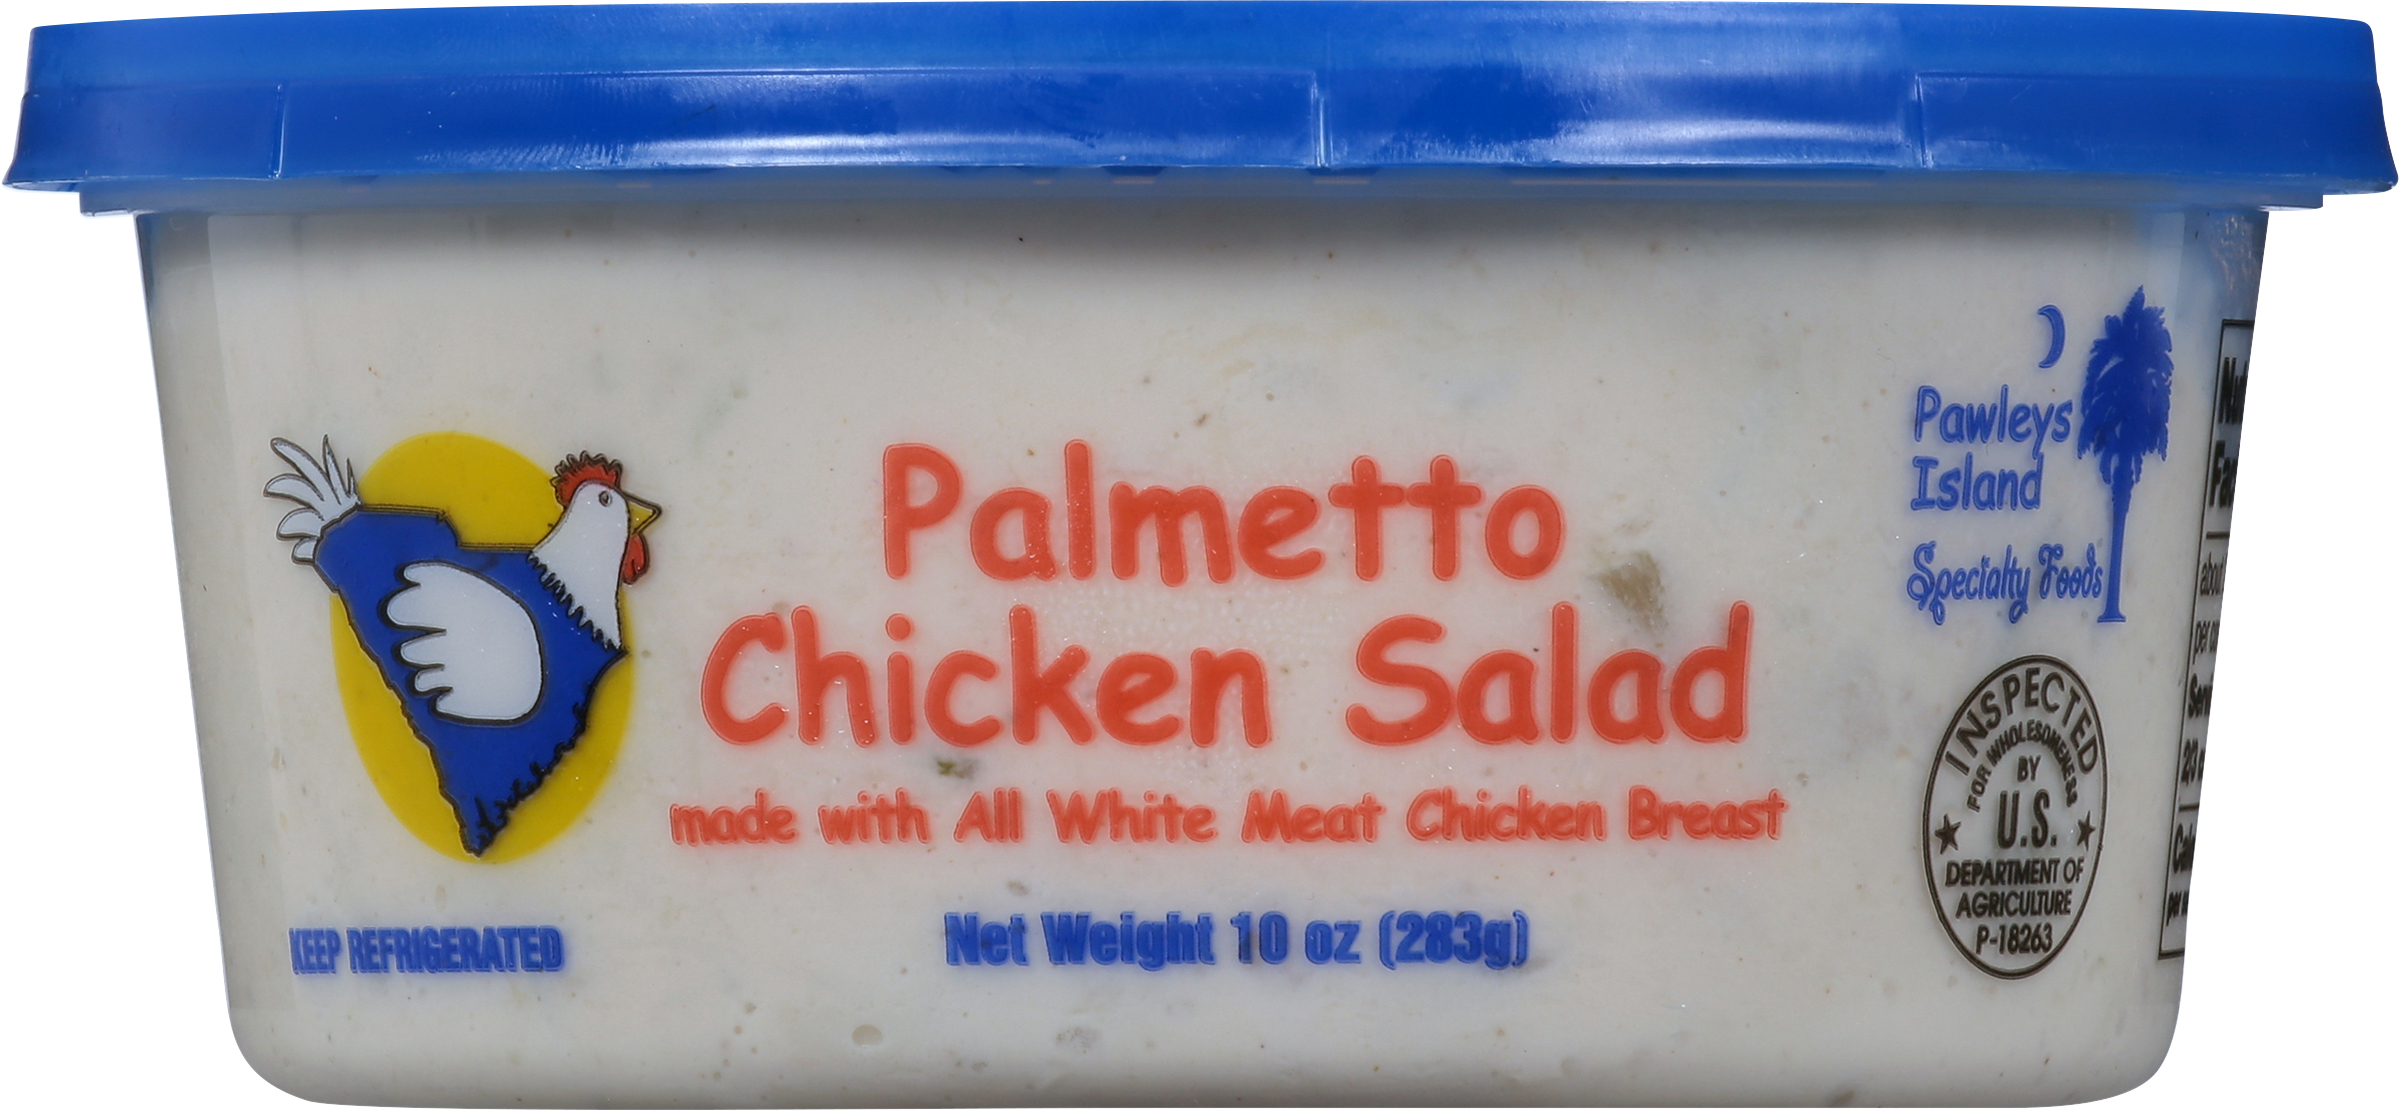 Chicken Salad, Palmetto